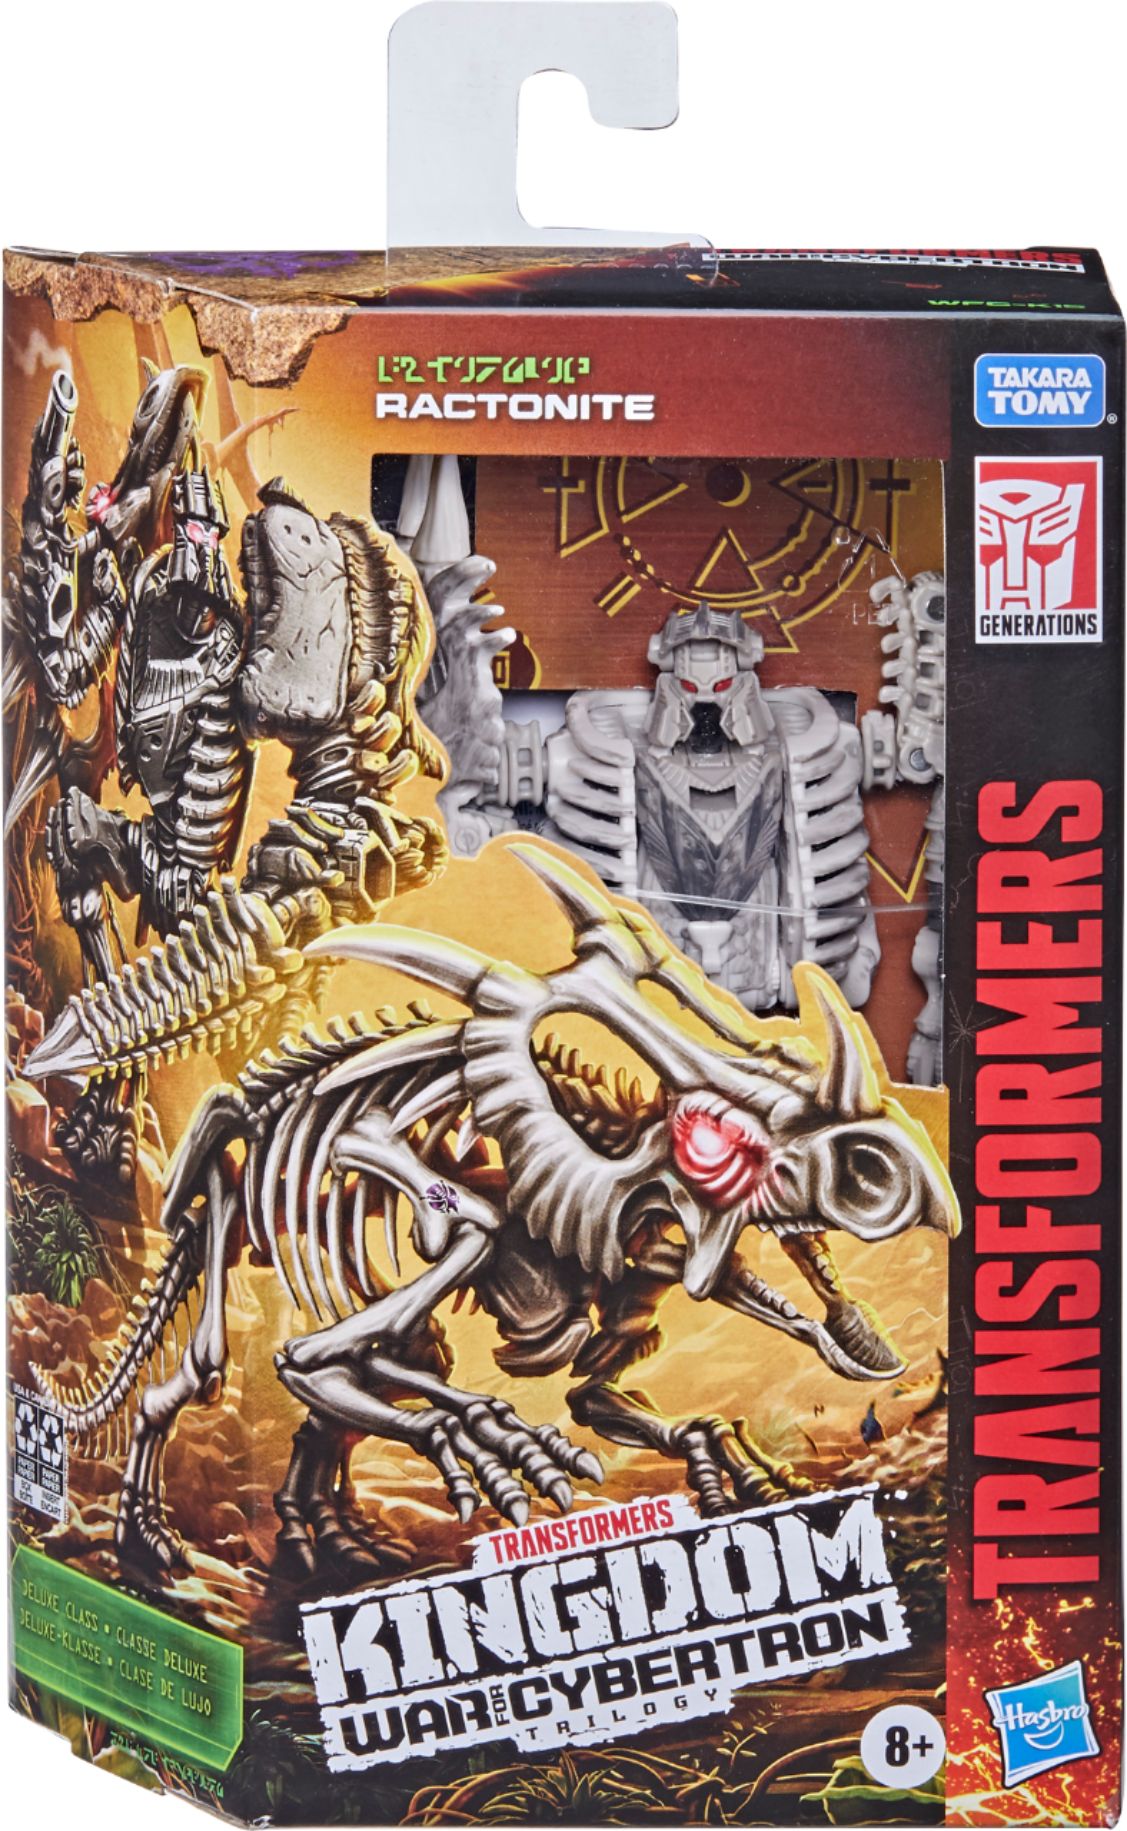 Transformers Generations War Für Cybertron Kingdom Deluxe Ractonite Hasbro 